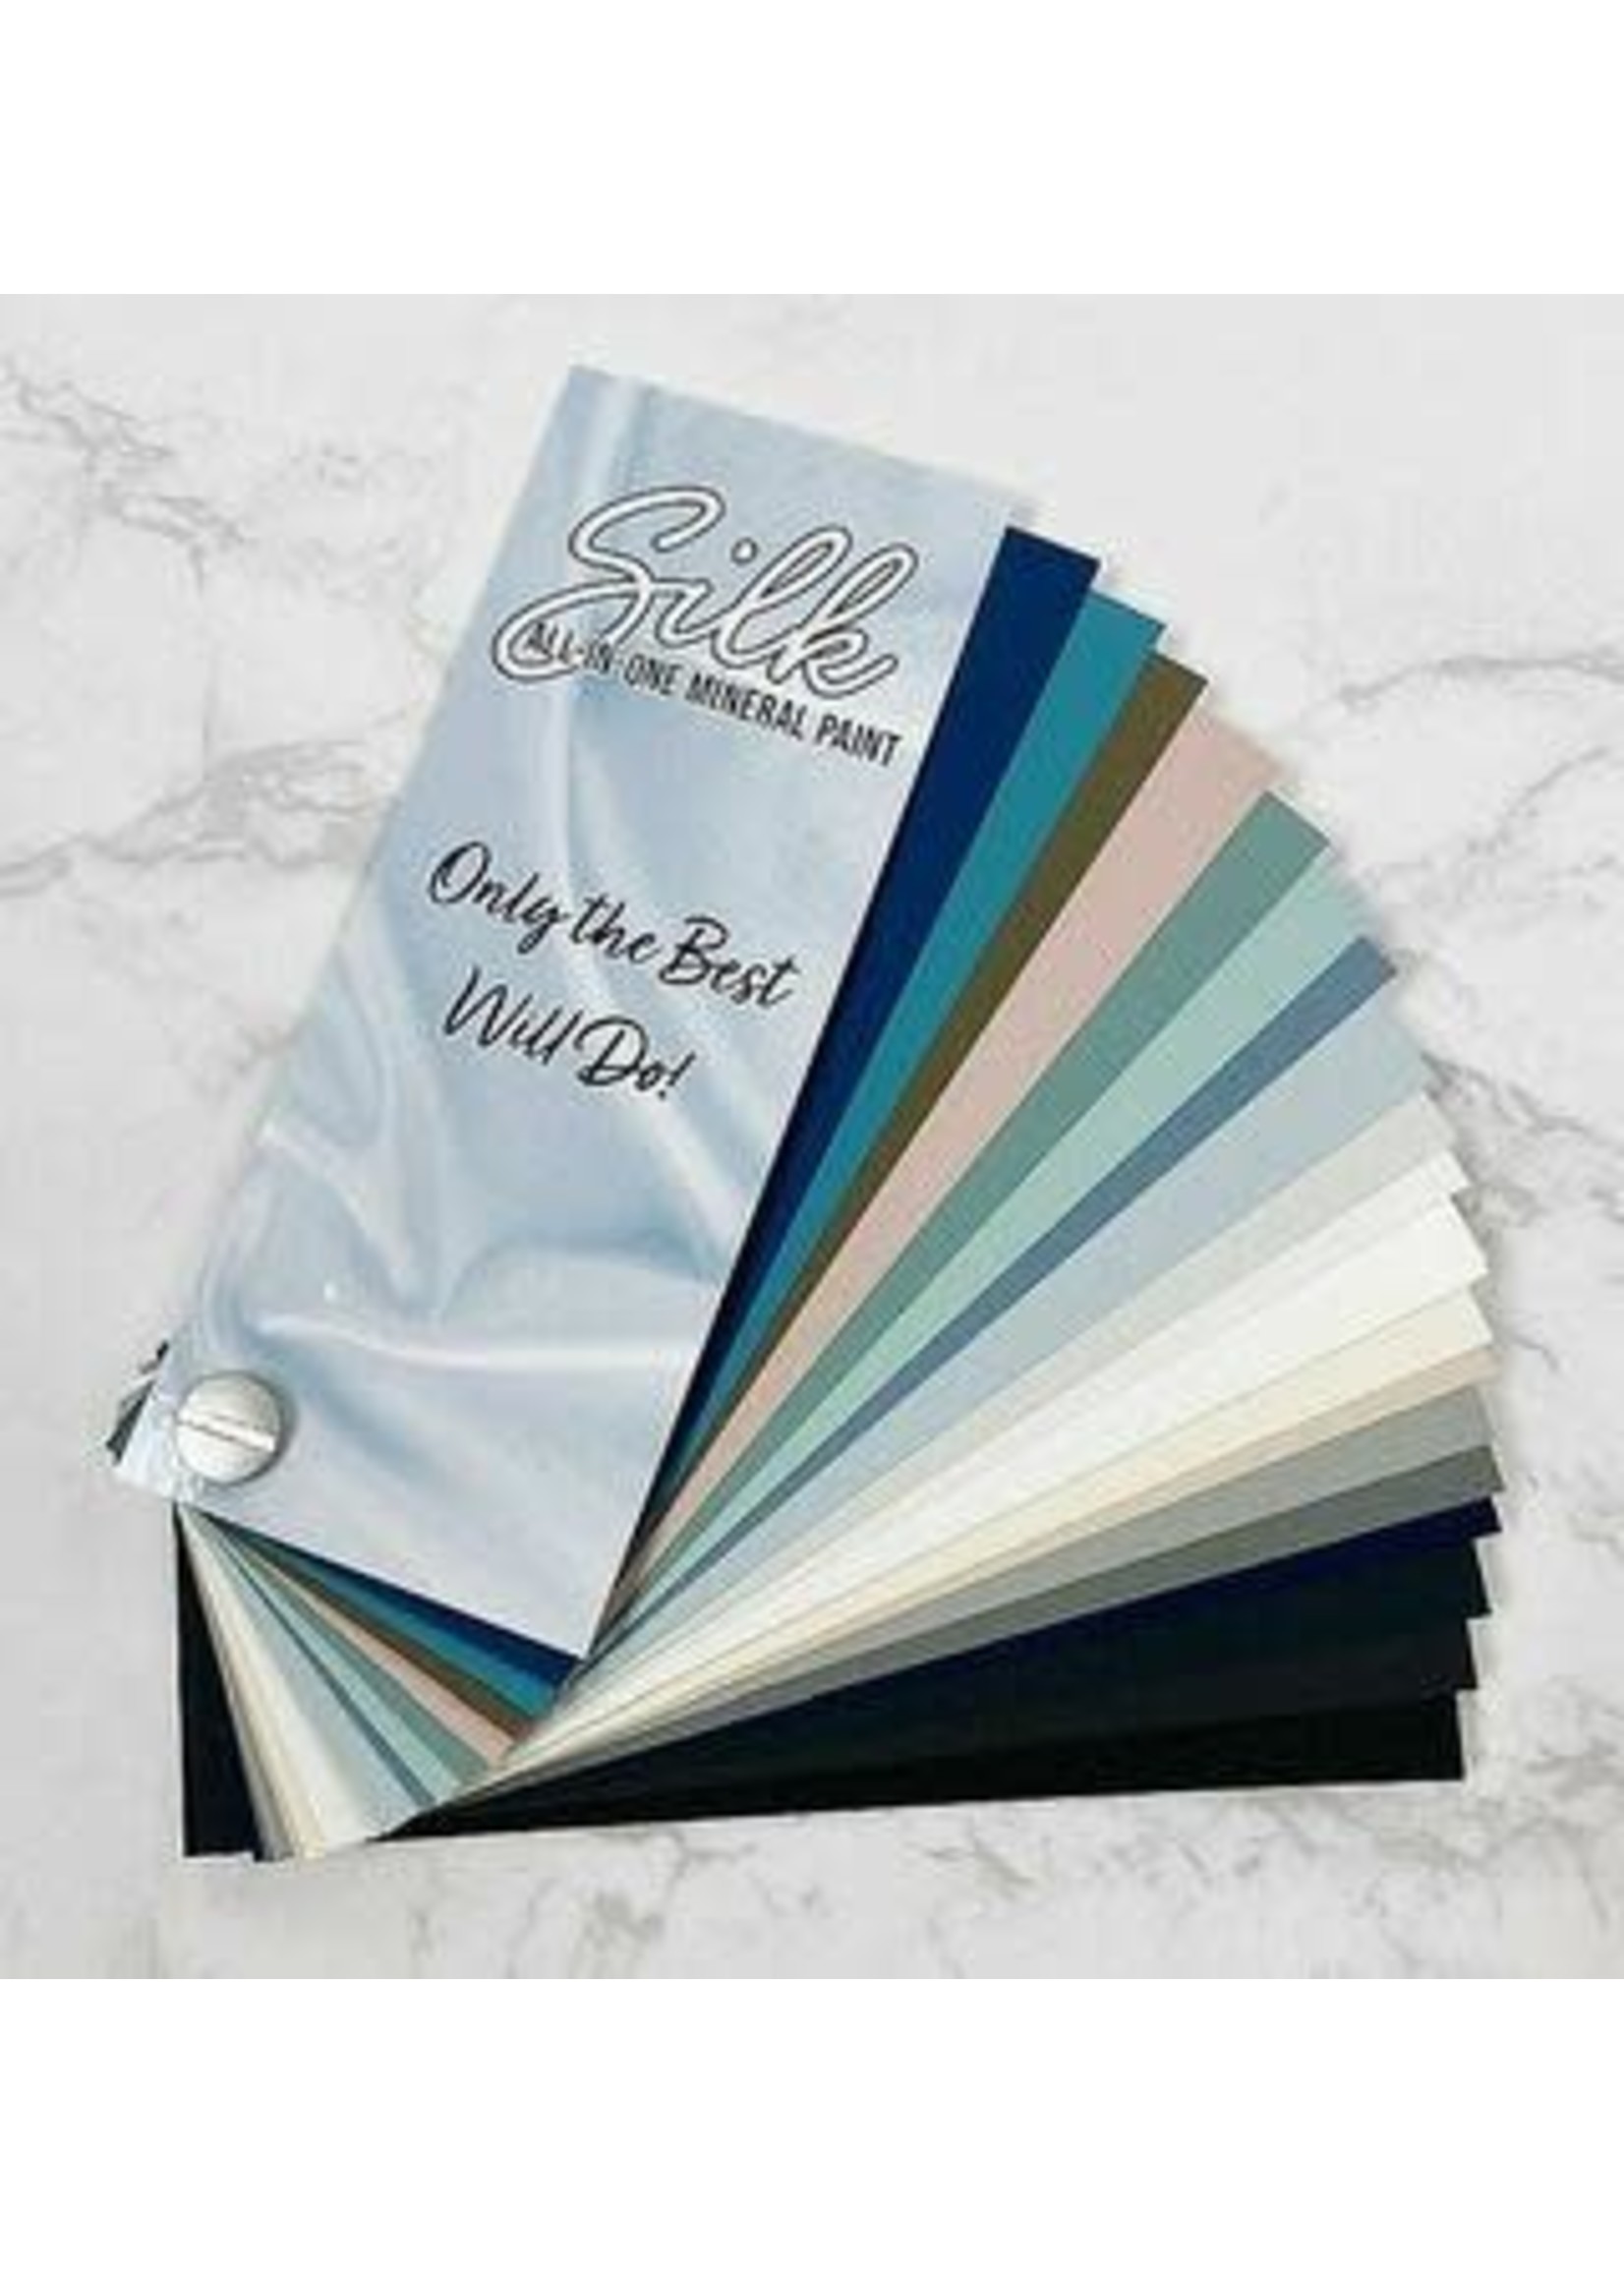 Dixie Belle Silk Paint Silk Paint Fan Deck